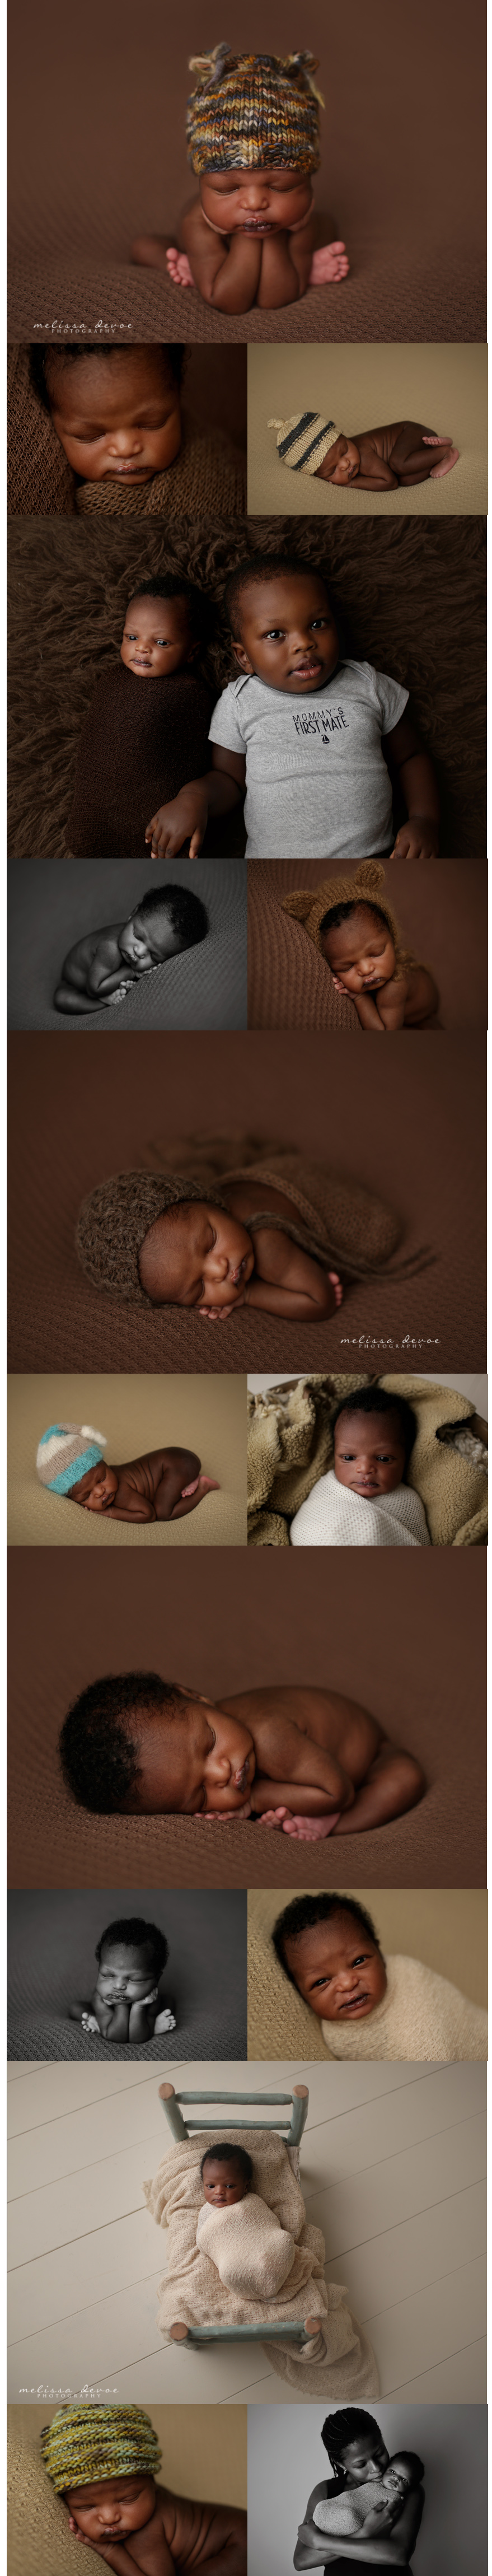 Melissa DeVoe Photography Raleigh Newborn Baby Photographer 1